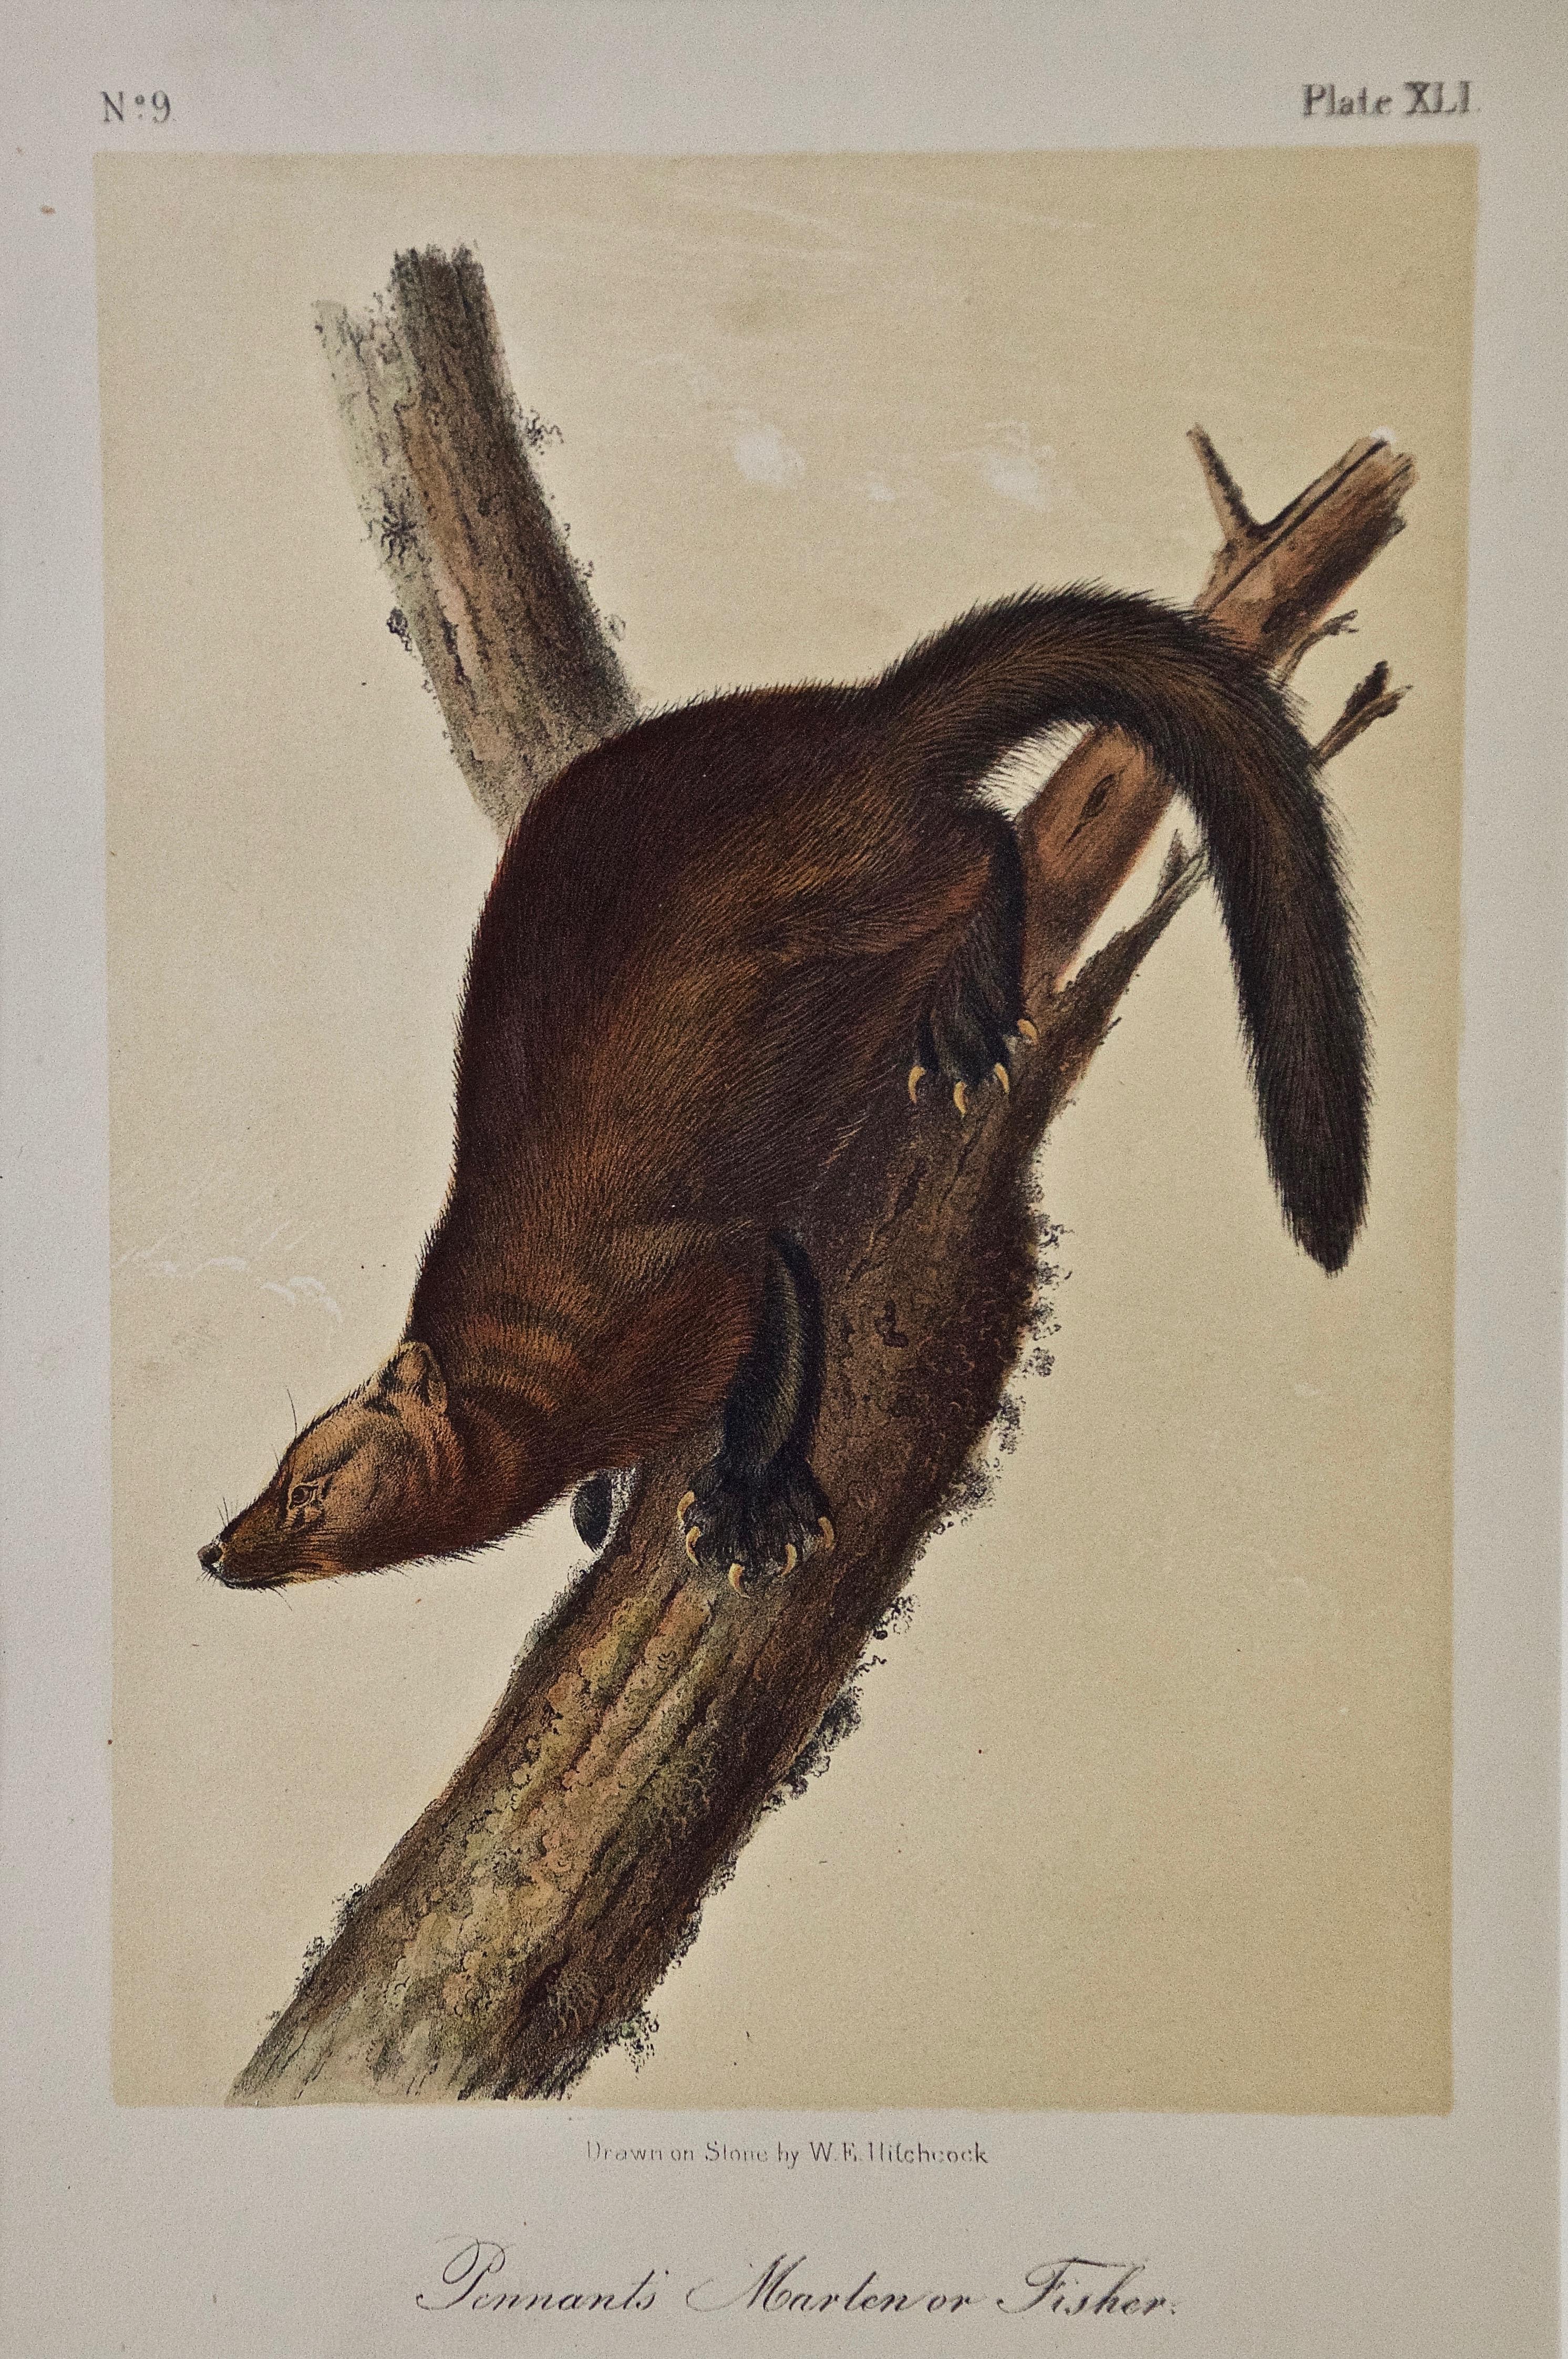 John James Audubon Animal Print - Original Audubon Hand Colored Lithograph of a "Pennant's Marten or Fisher"